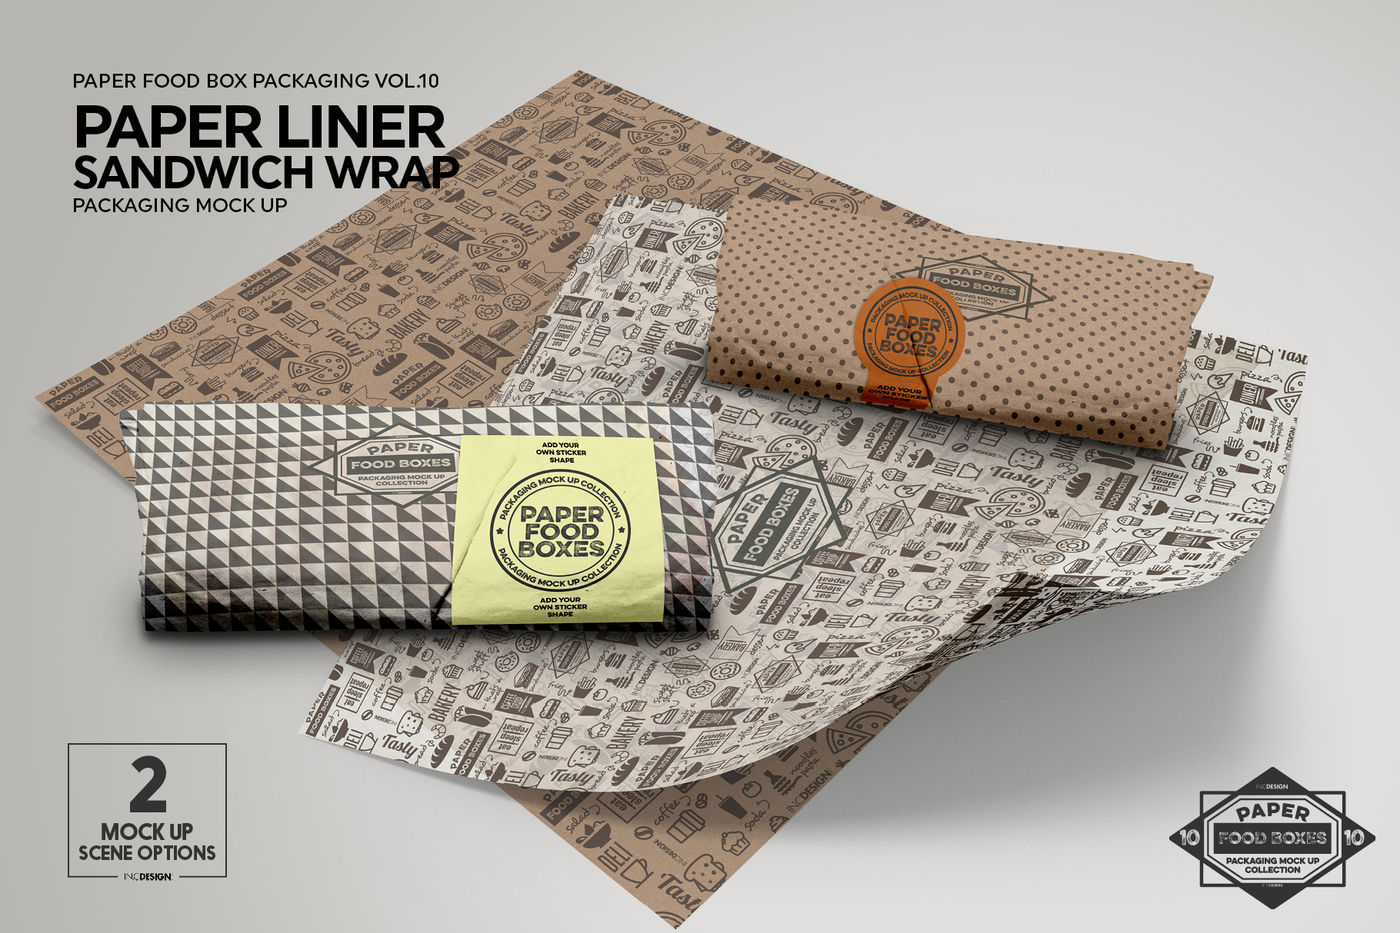 Download Wrap Sandwich Burrito Paper Liner Mockup By INC Design ...